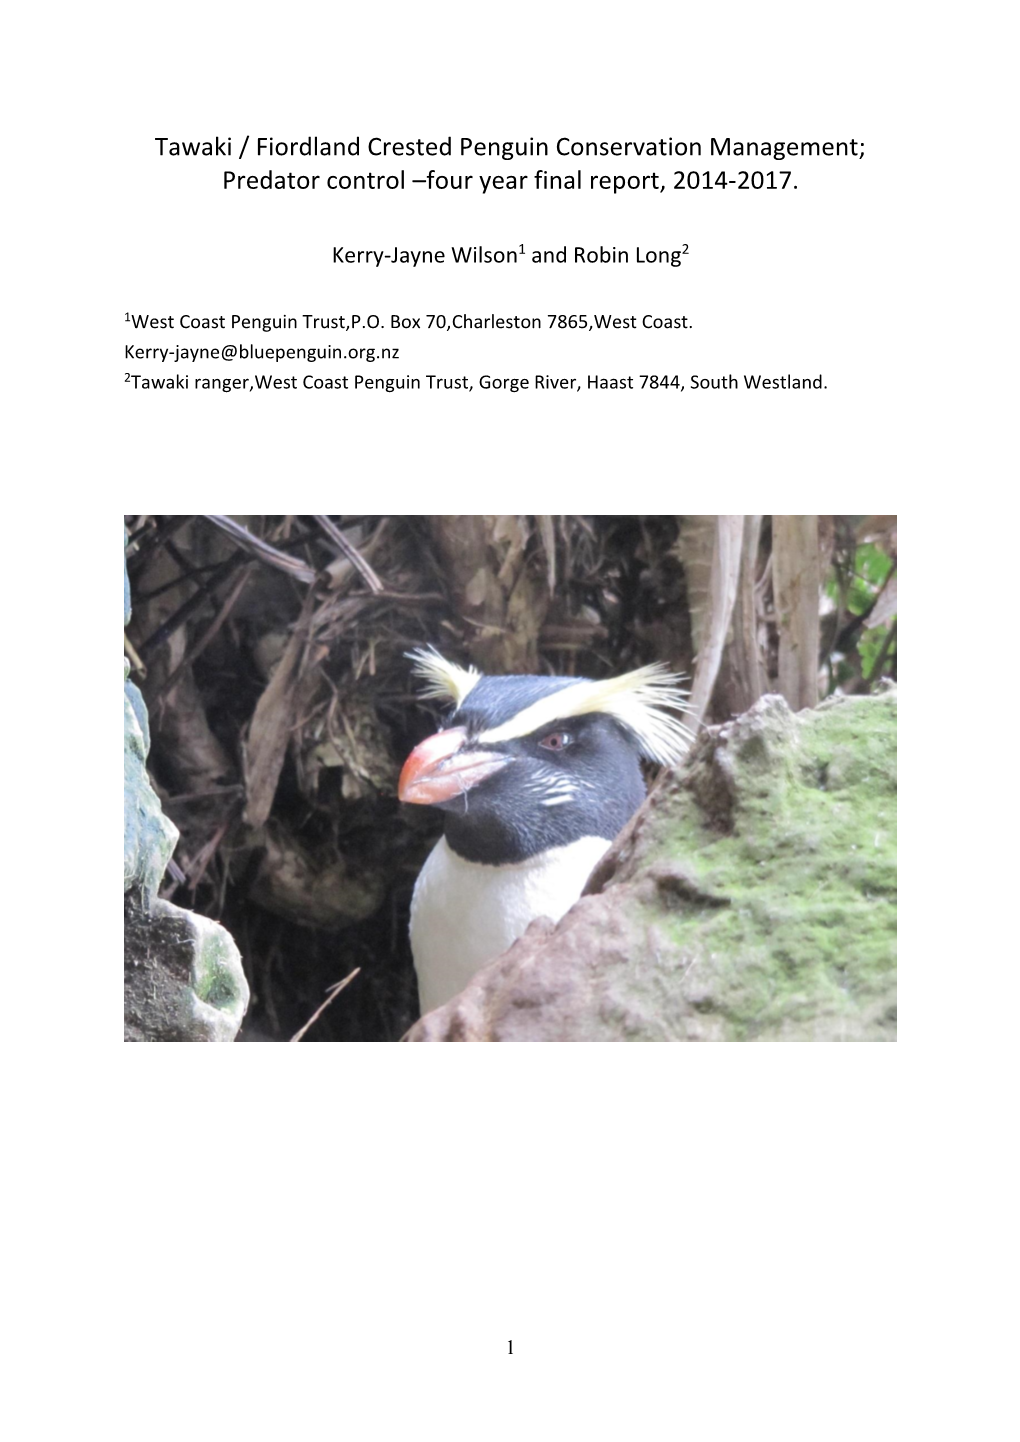 Tawaki / Fiordland Crested Penguin Conservation Management; Predator Control –Four Year Final Report, 2014-2017